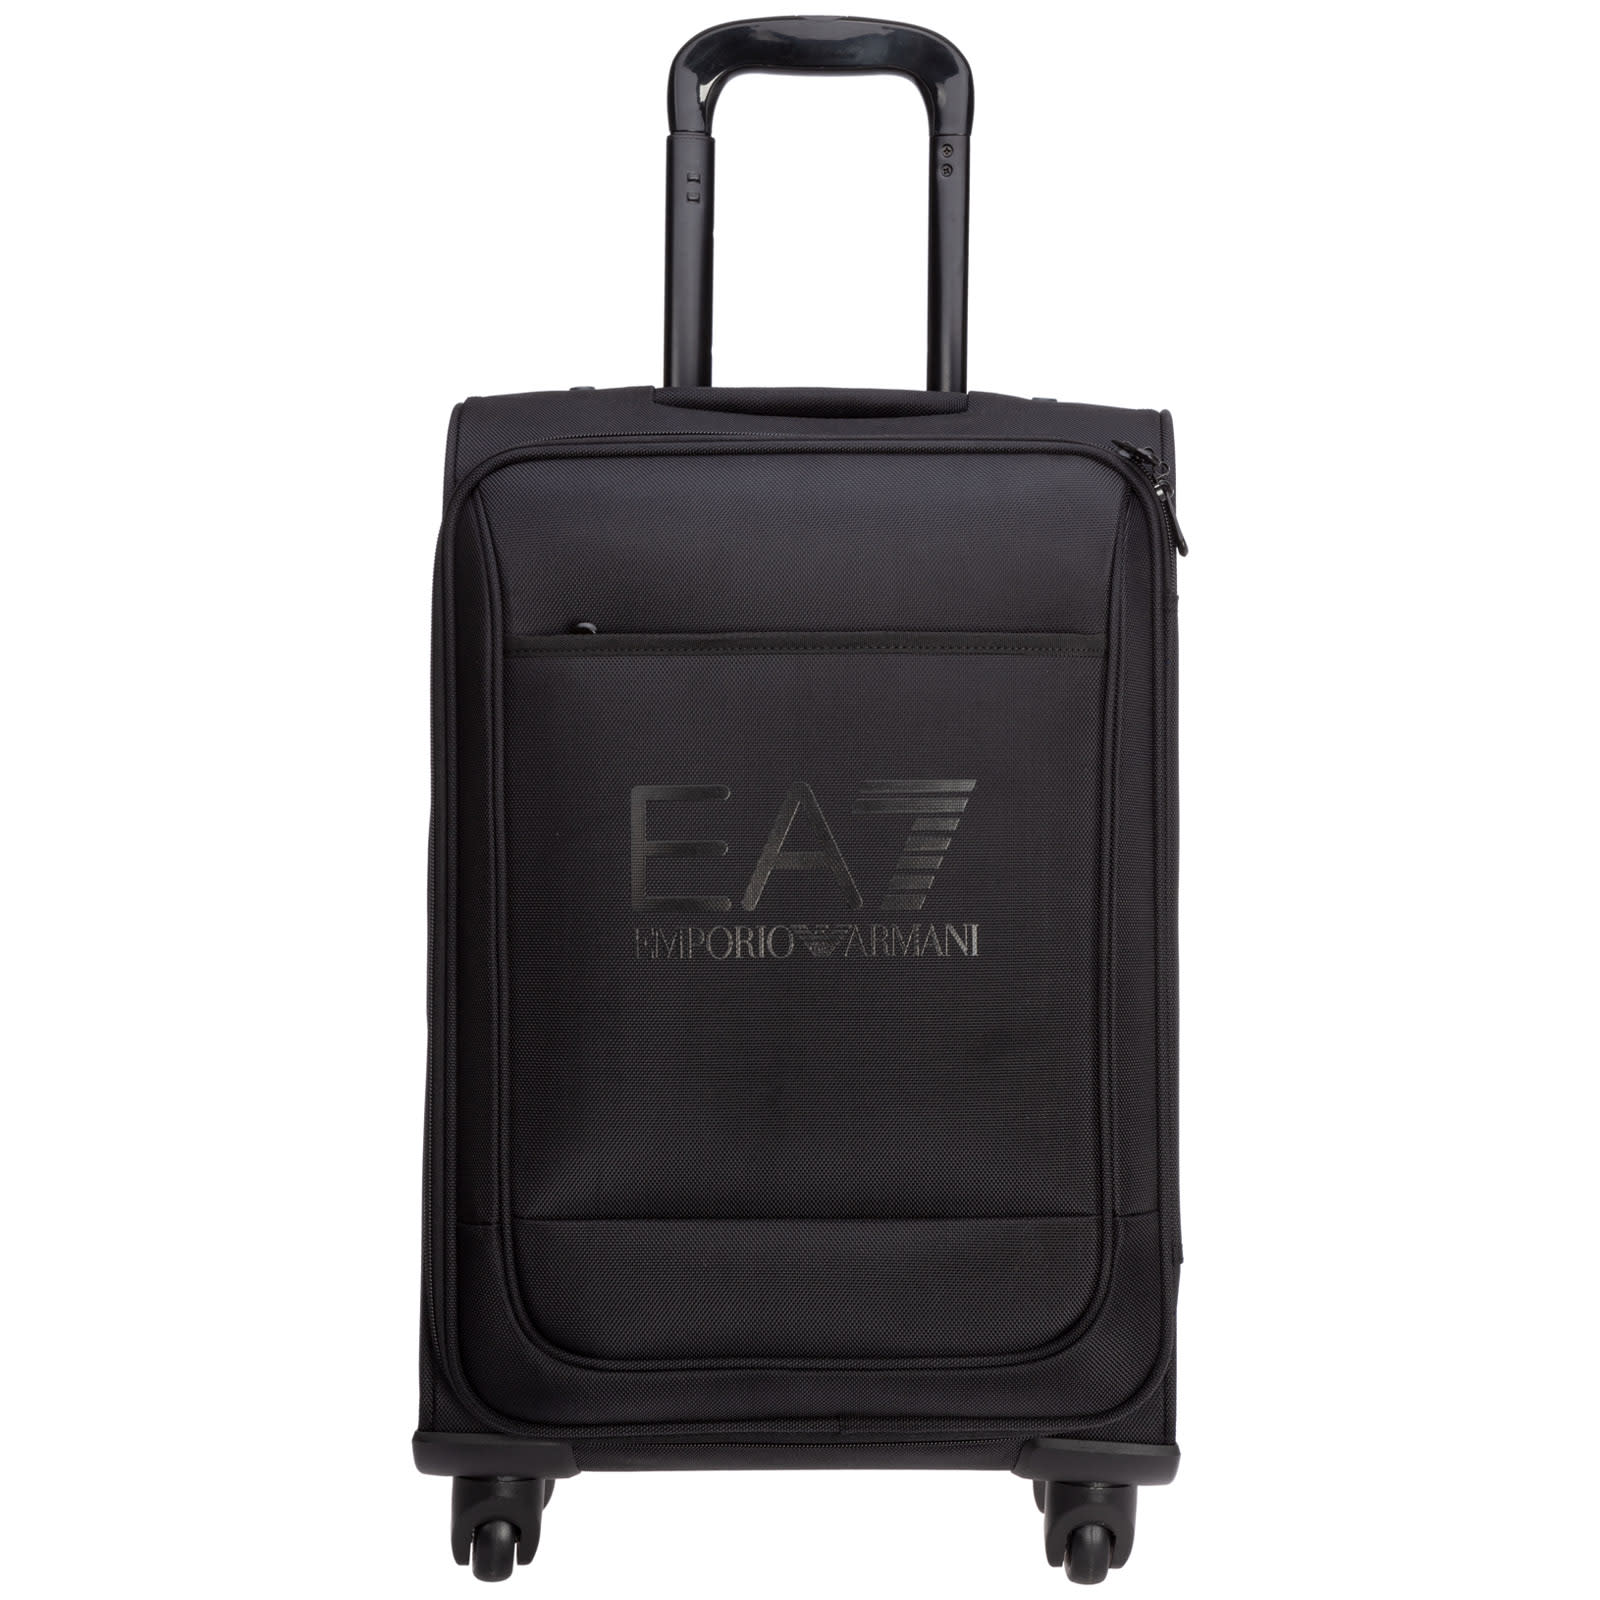 Emporio Armani Ea7 C2 Ultimate Suitcase